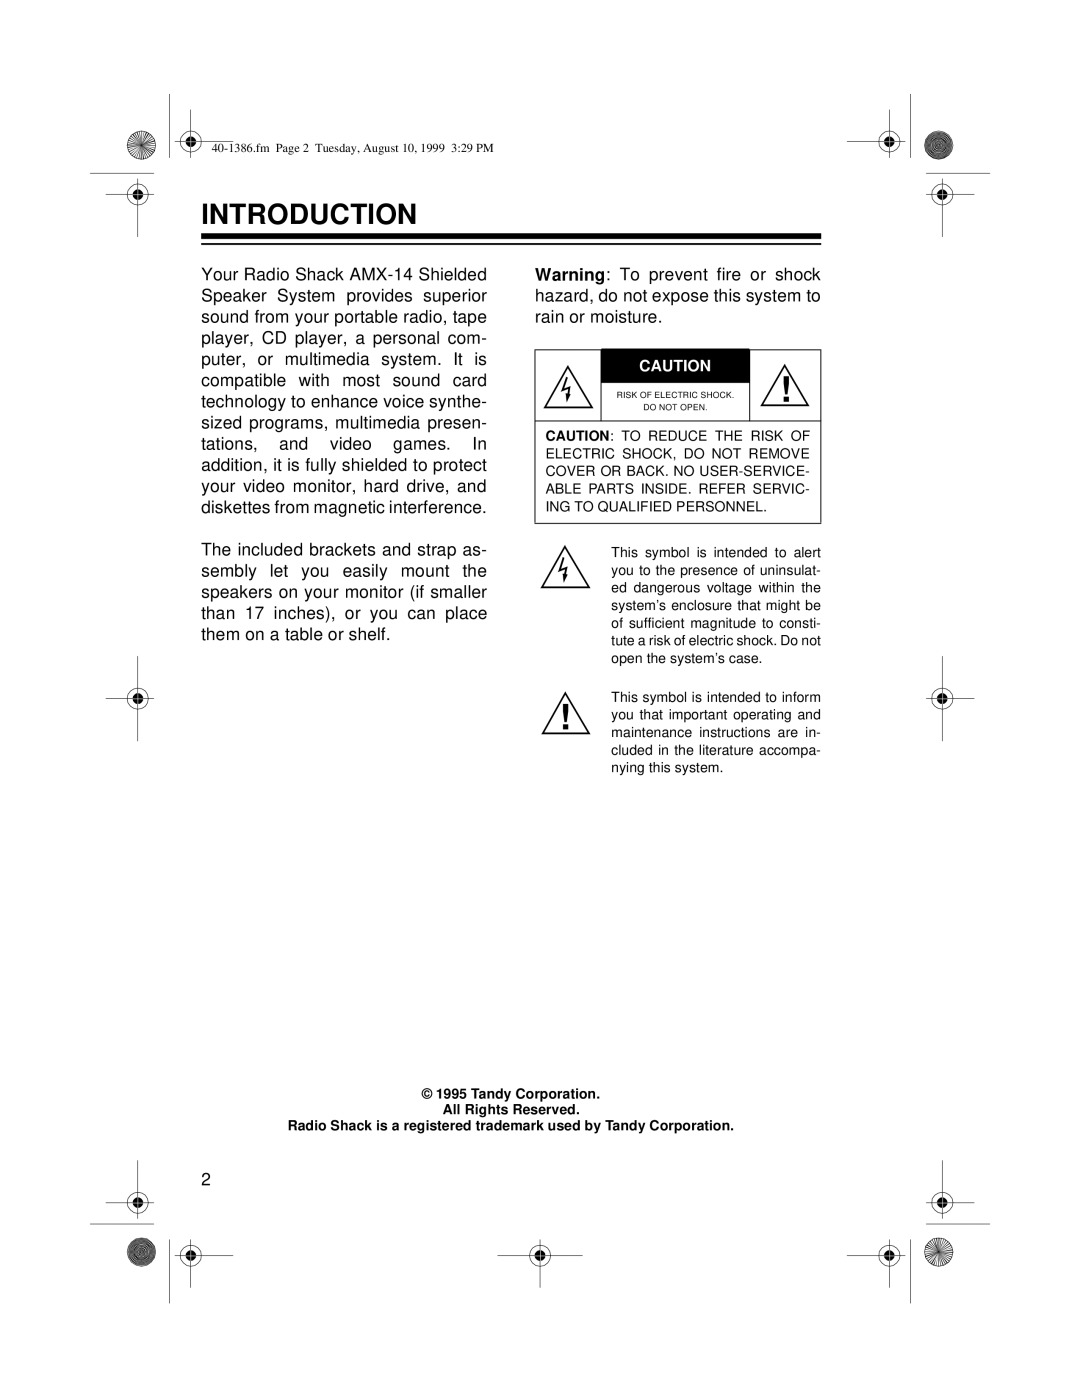 Radio Shack AMX-14 owner manual Introduction 